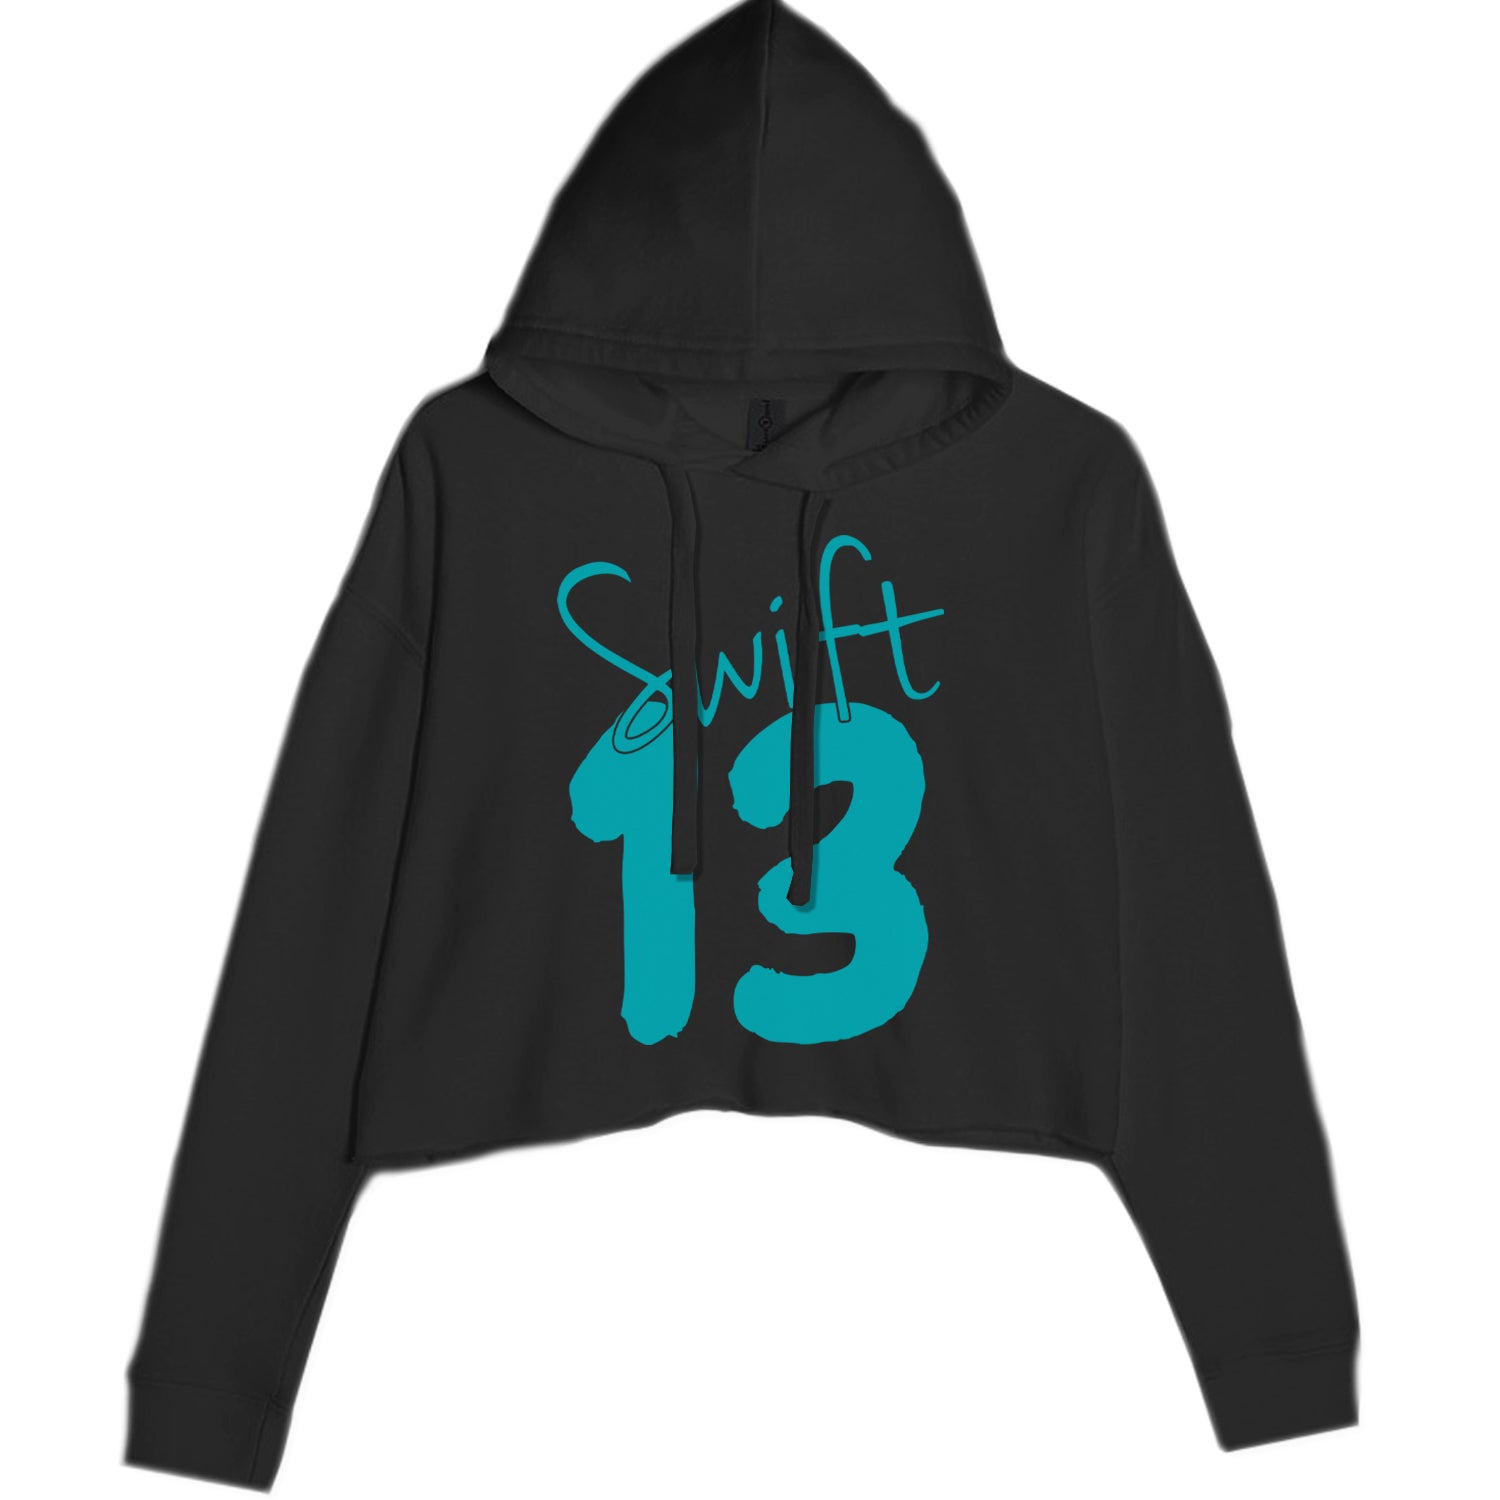 13 Swift 13 Lucky Number Era TTPD Values! Sweatshirt Black